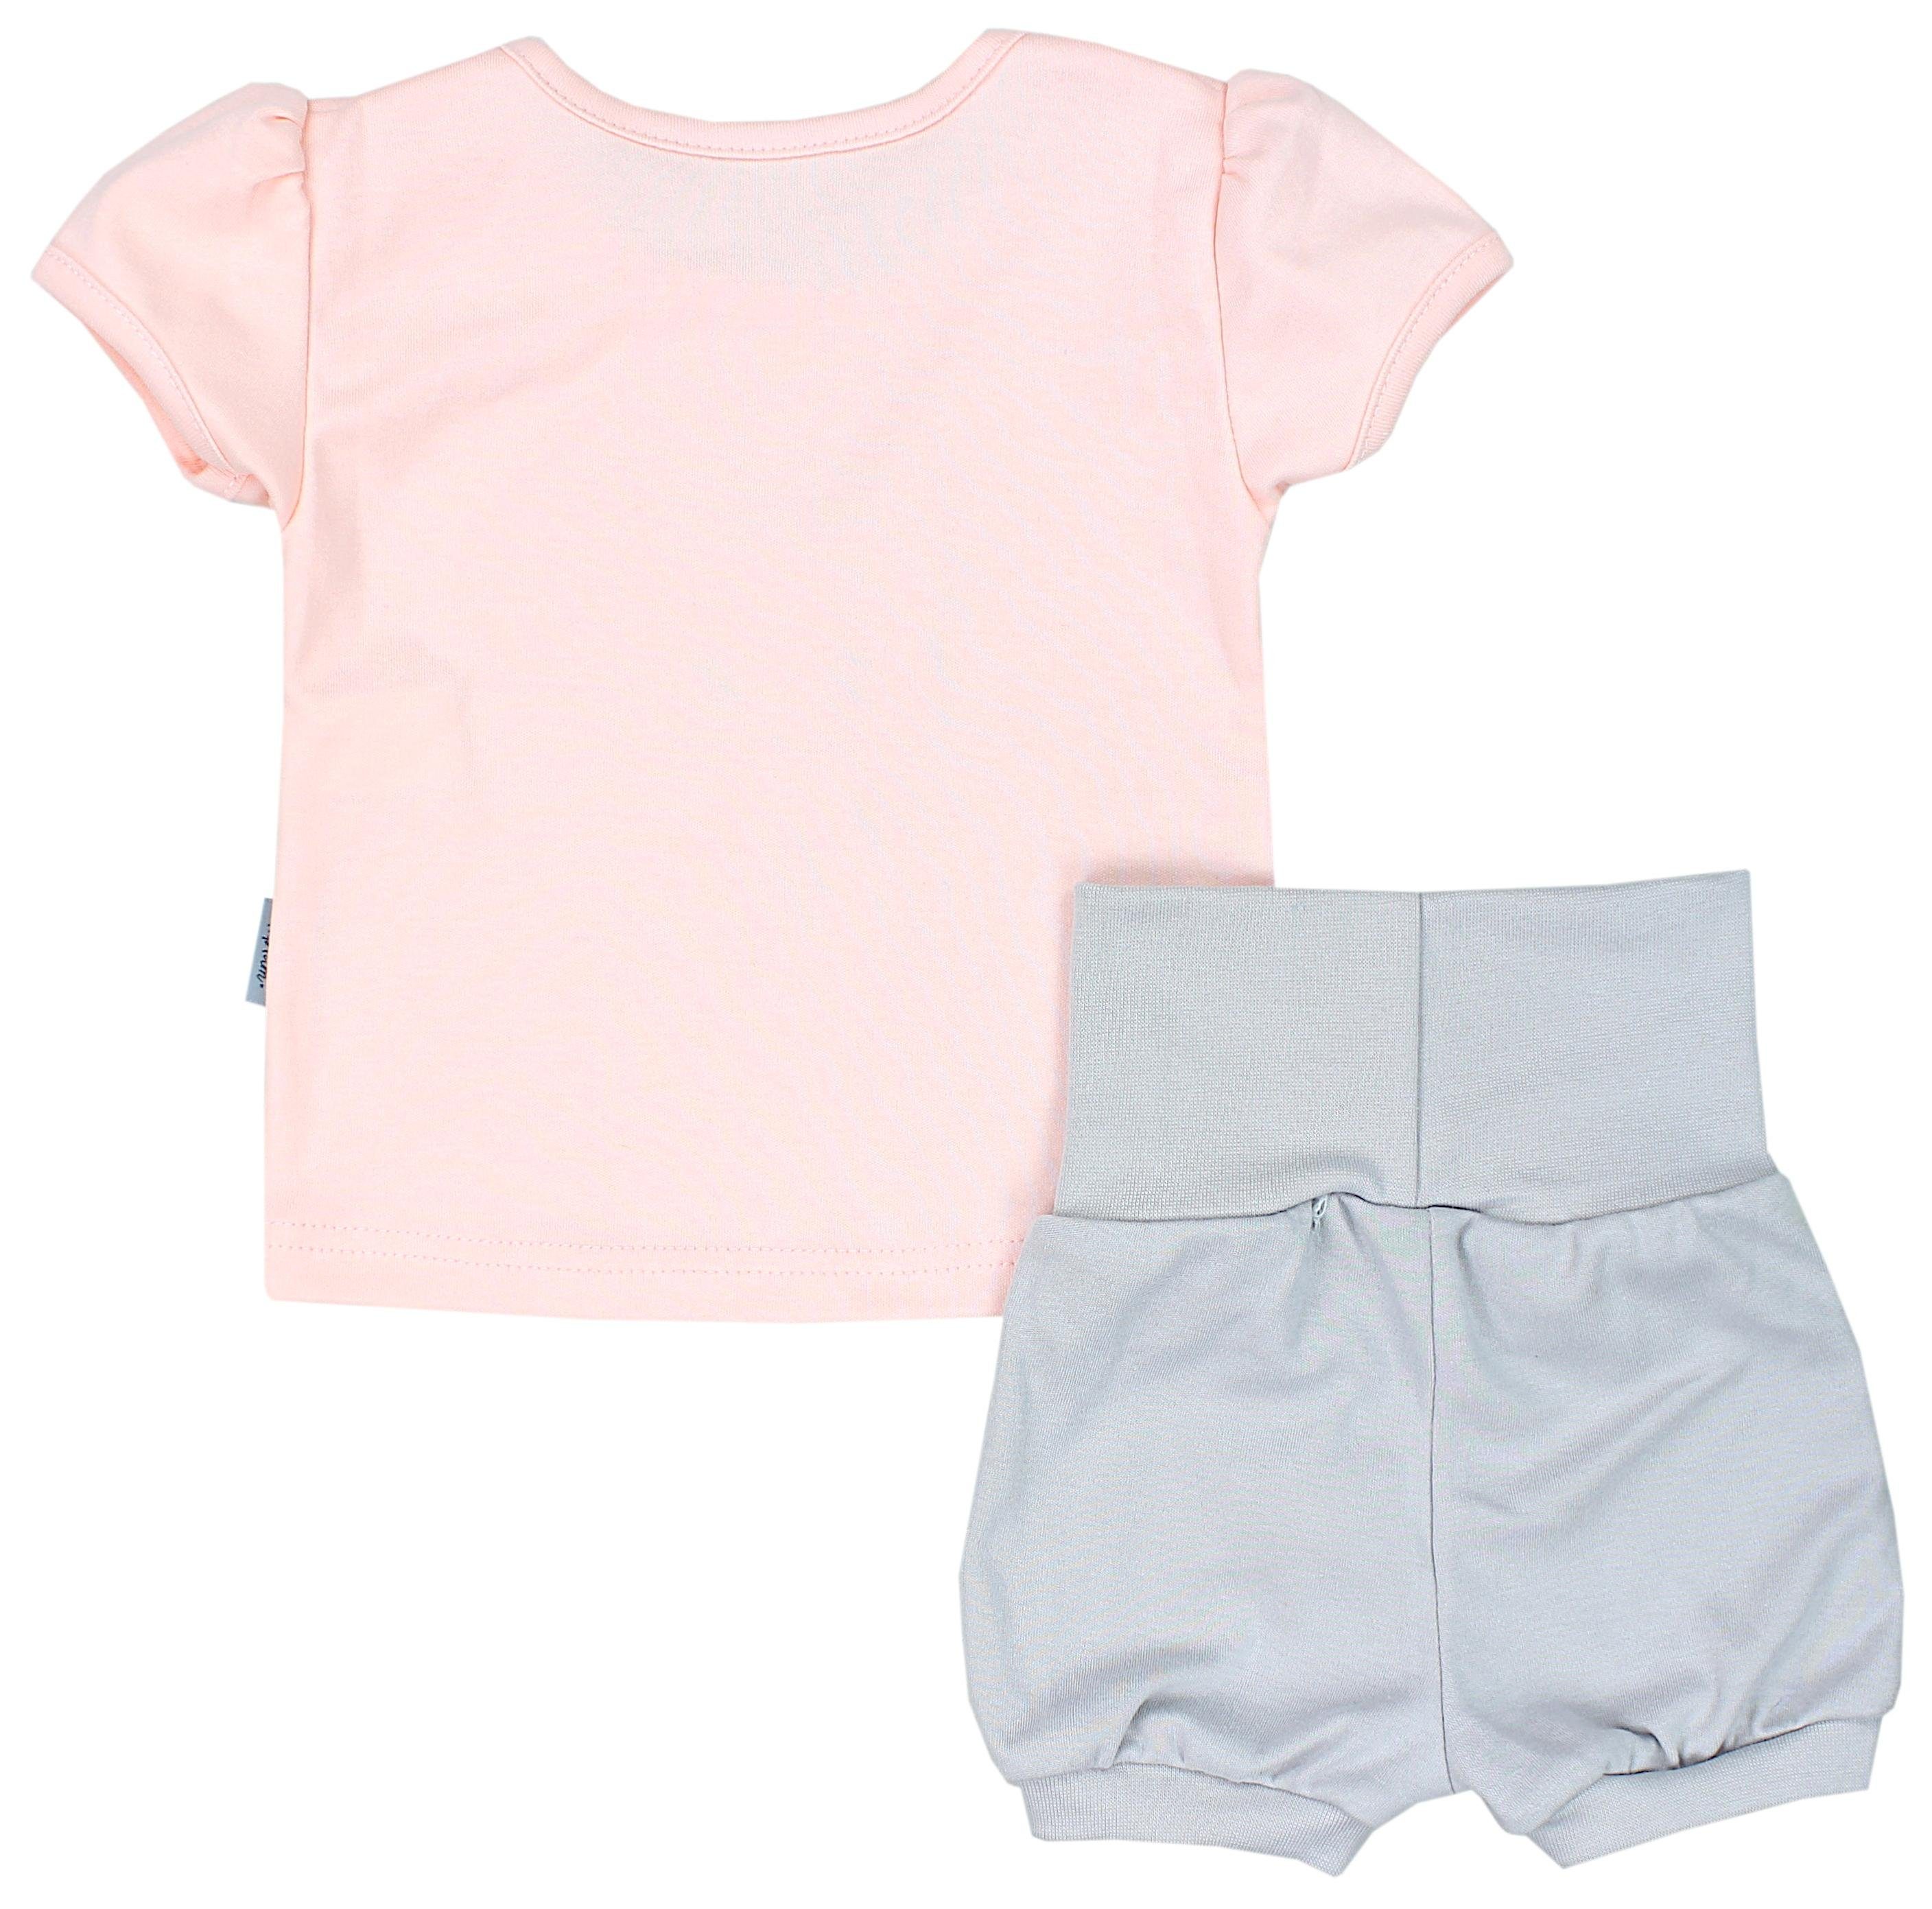 & Grau Sommer Baby TupTam Hose T-Shirt Aprikose Katze Mädchen Bekleidung Shirt TupTam / Shorts Set